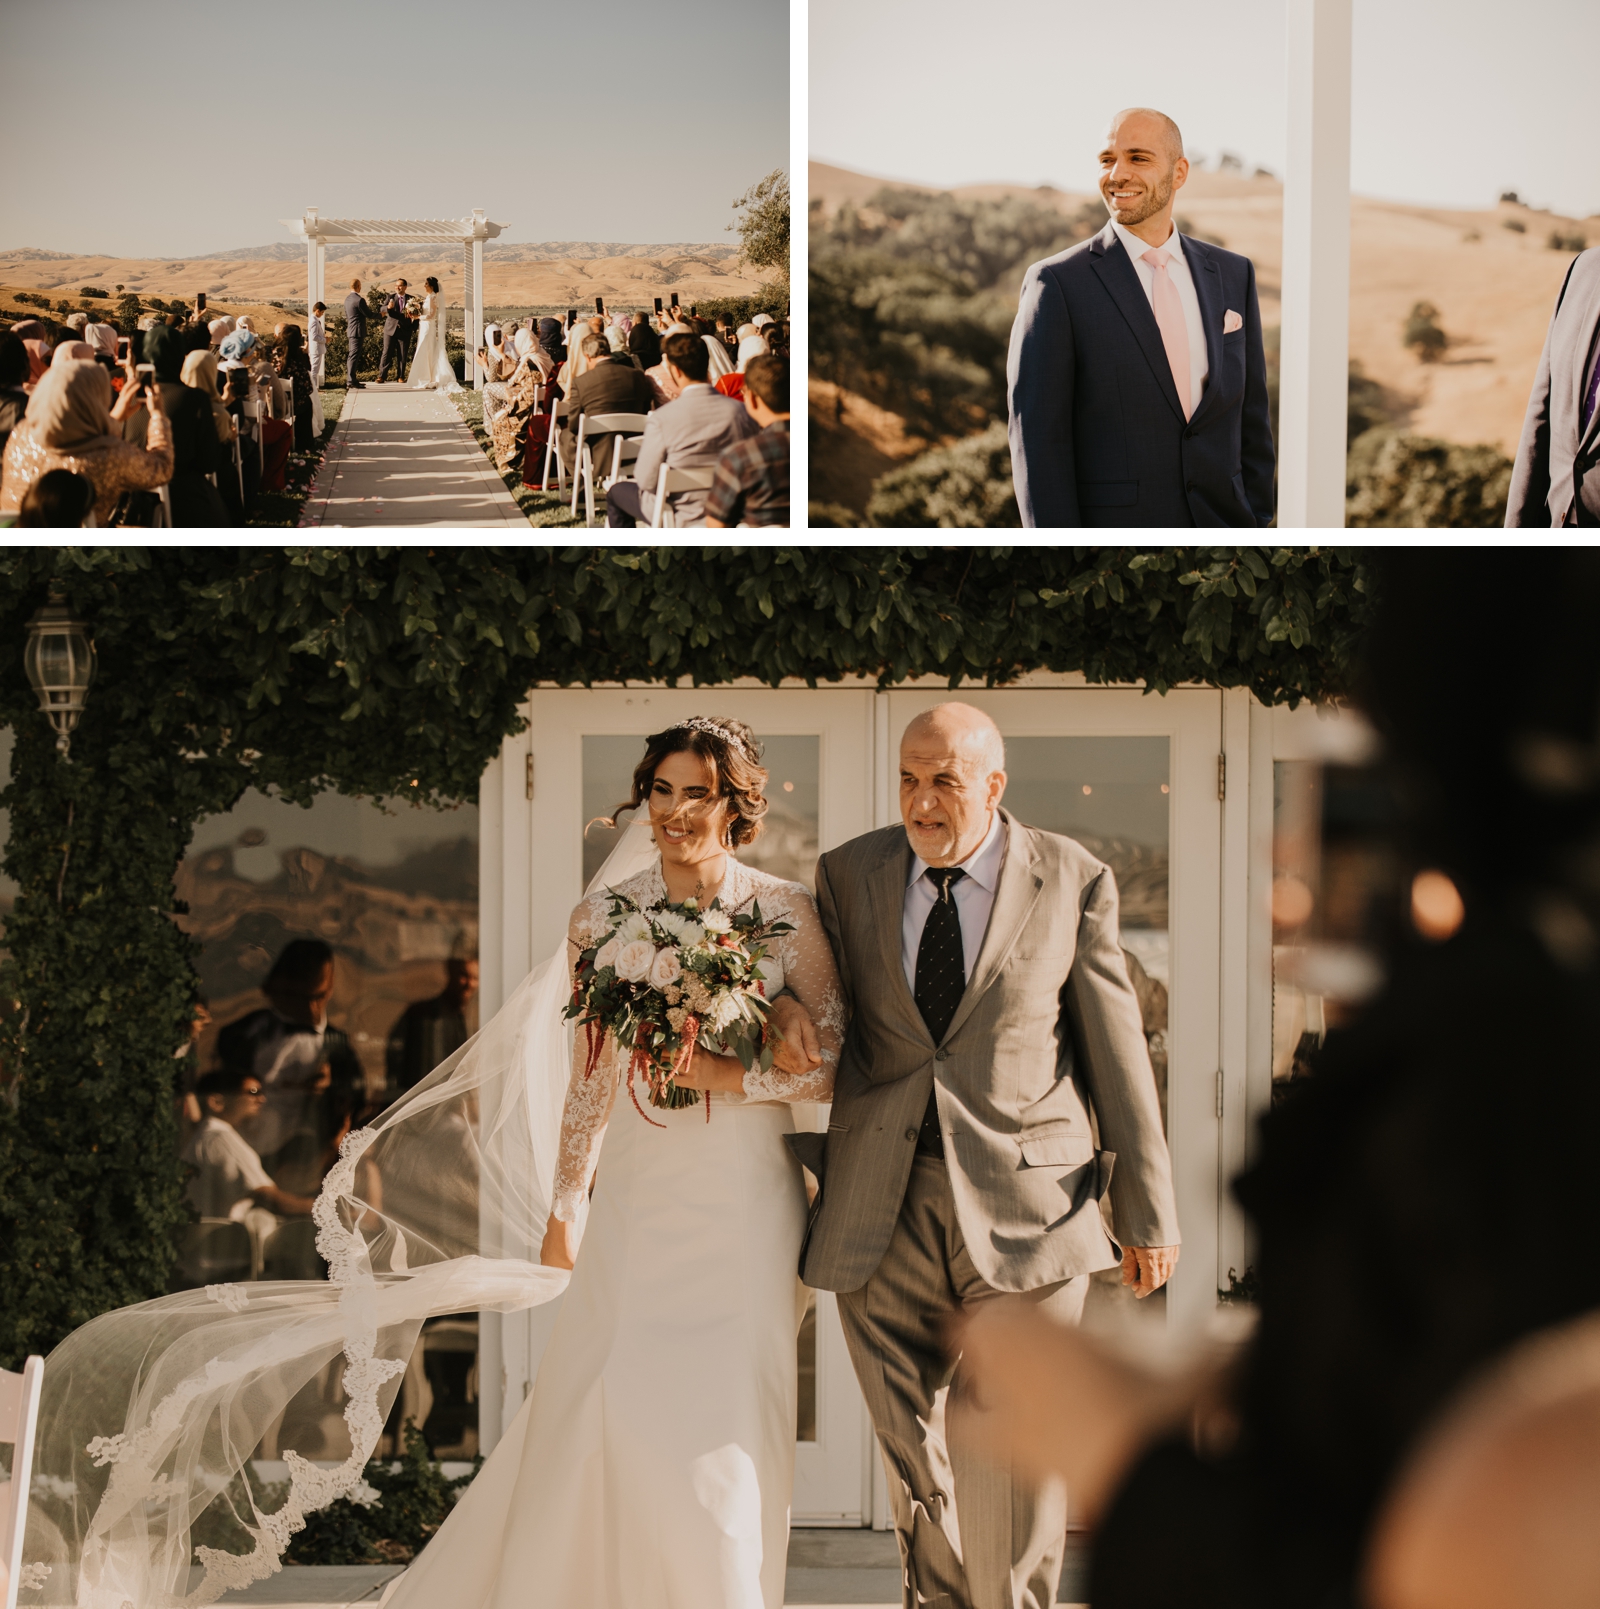 California Wedding Ceremony overlooking Vineyards | Juju Photography - California Wedding Photographer